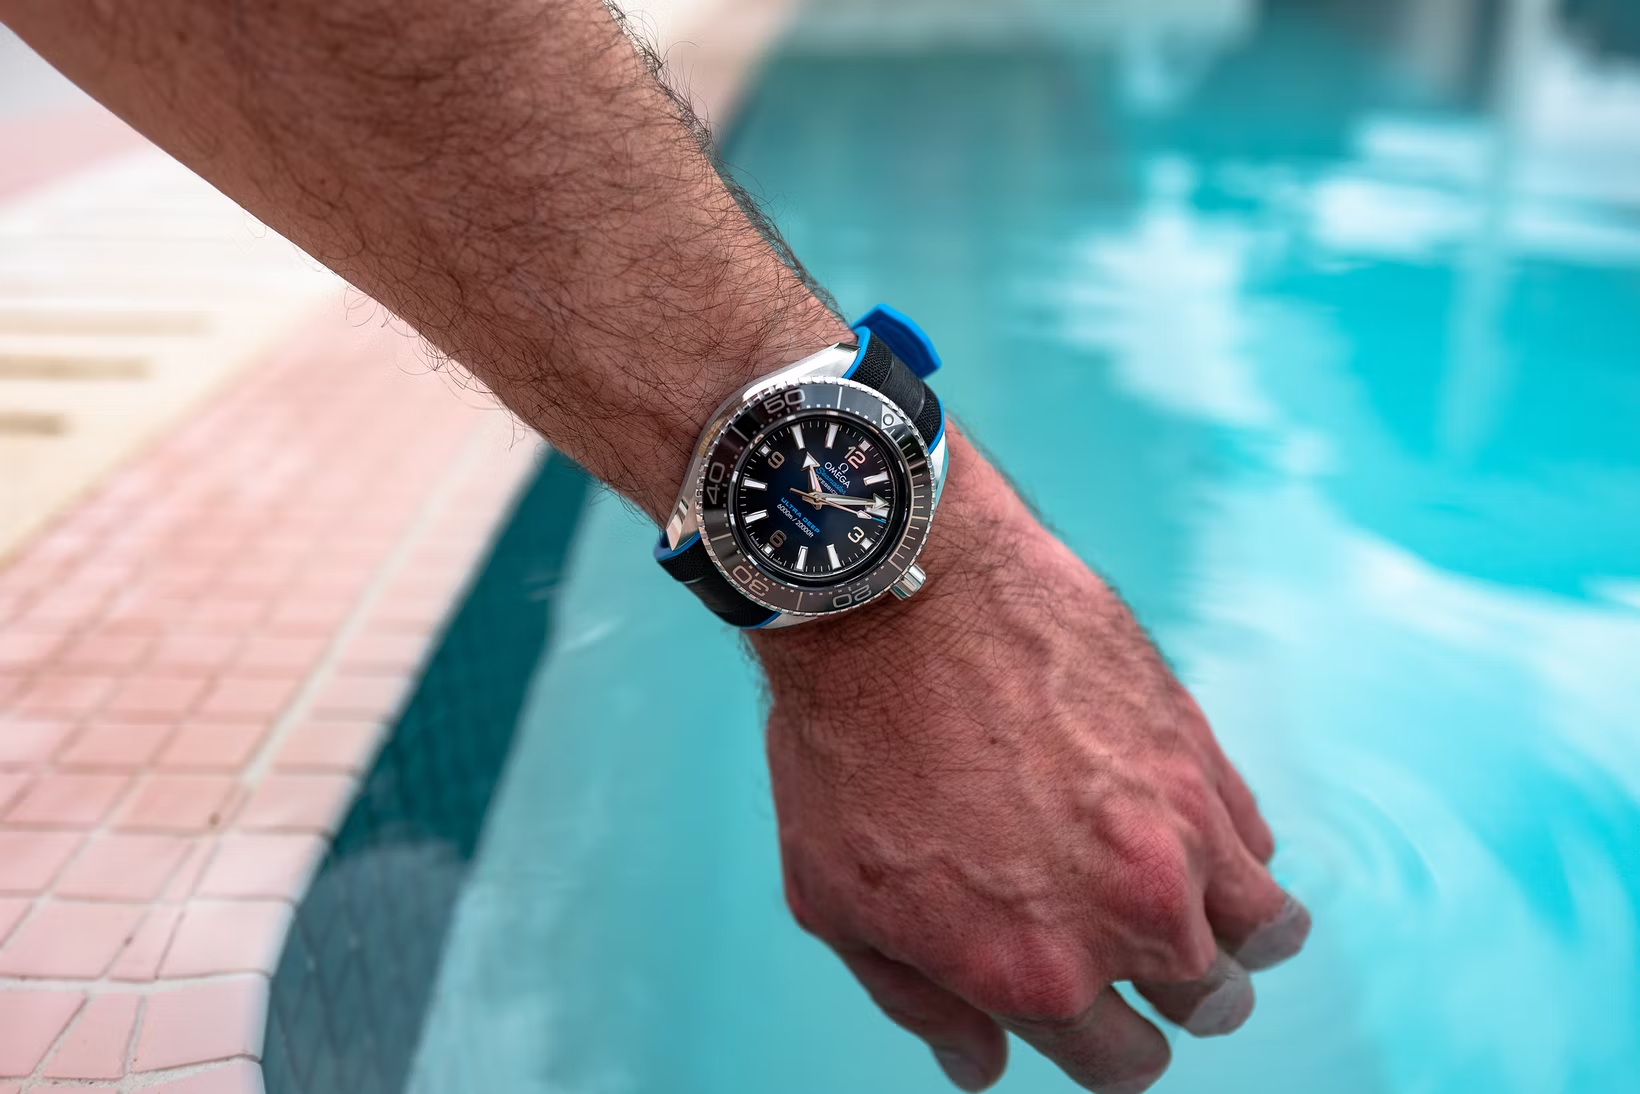 SALE／58%OFF】 HONHX 腕時計 ダイバーズウォッチ デジタル腕時計 新品 3気圧防水